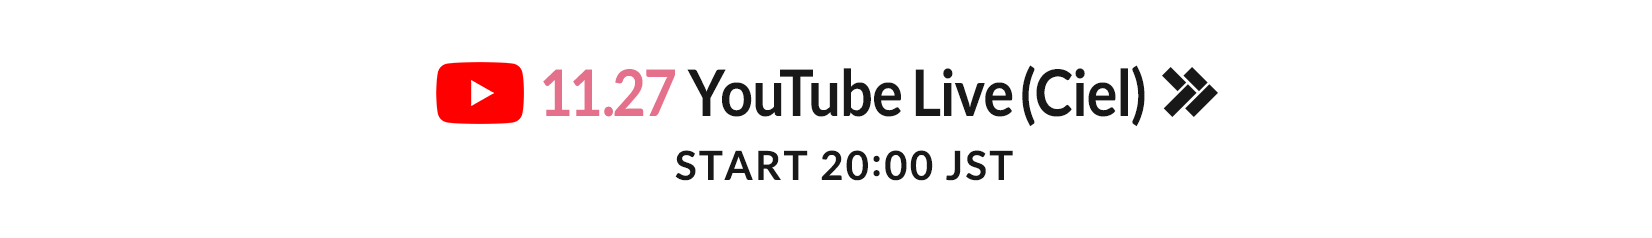 11.27 YouTube Live START 20:00 JST